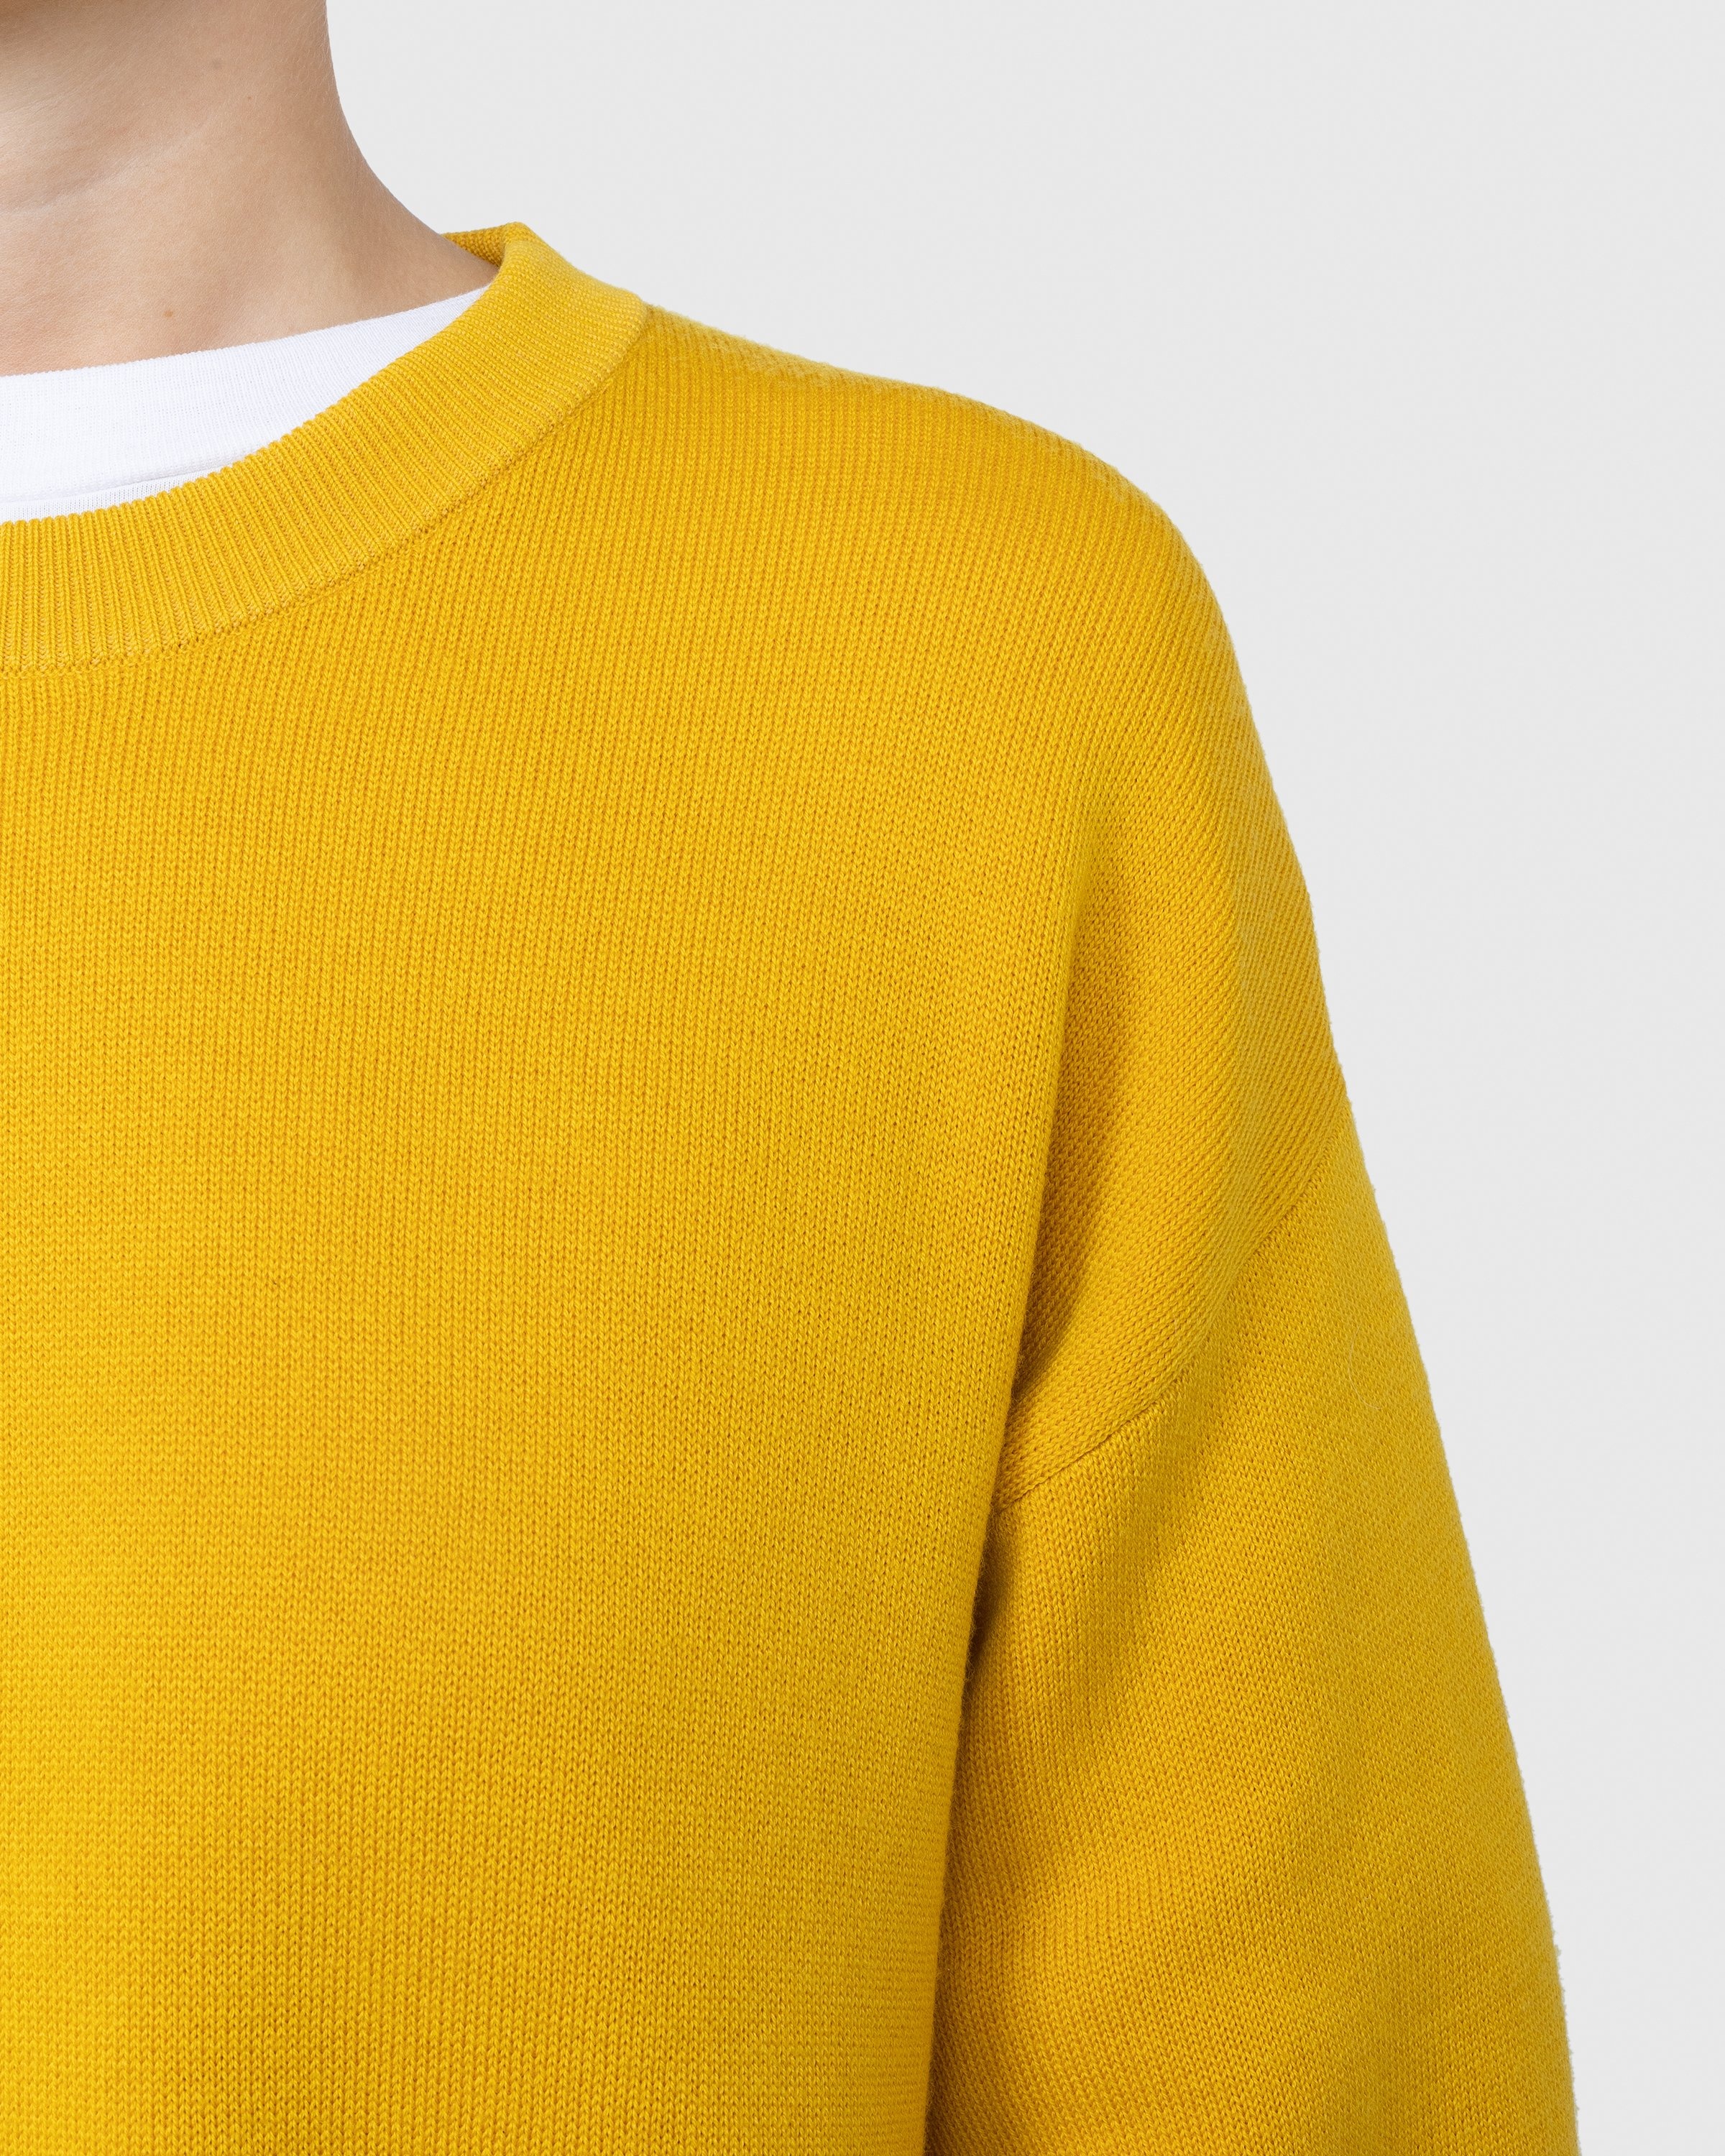 Acne Studios – Merino Wool Crewneck Sweater Yellow - Knitwear - Yellow - Image 6